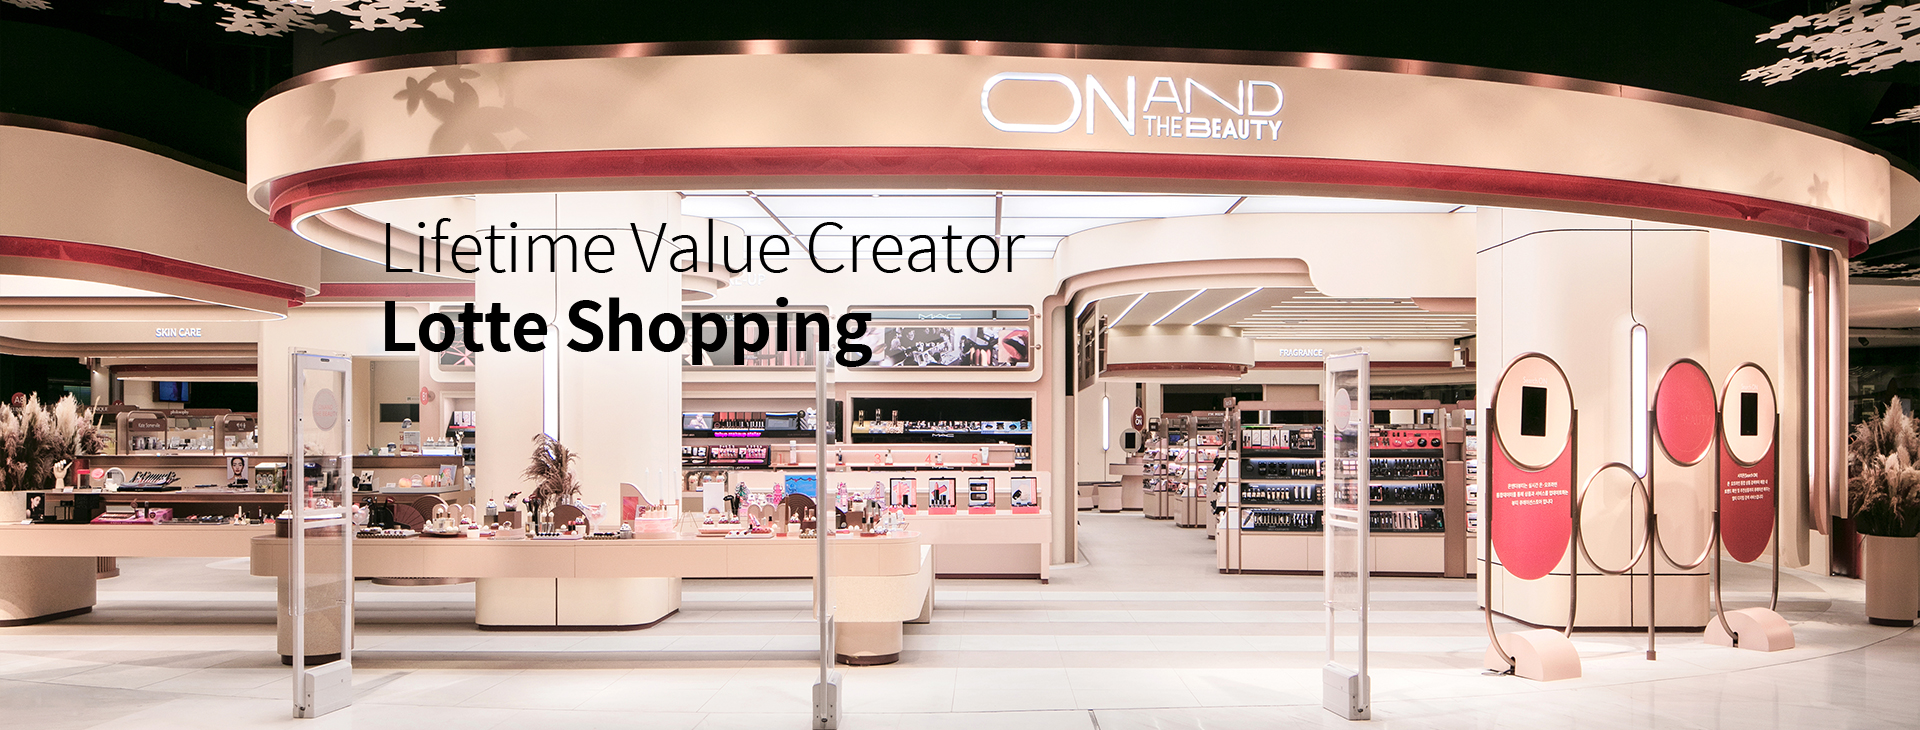 Lifetime Value Creator Lotte Shopping